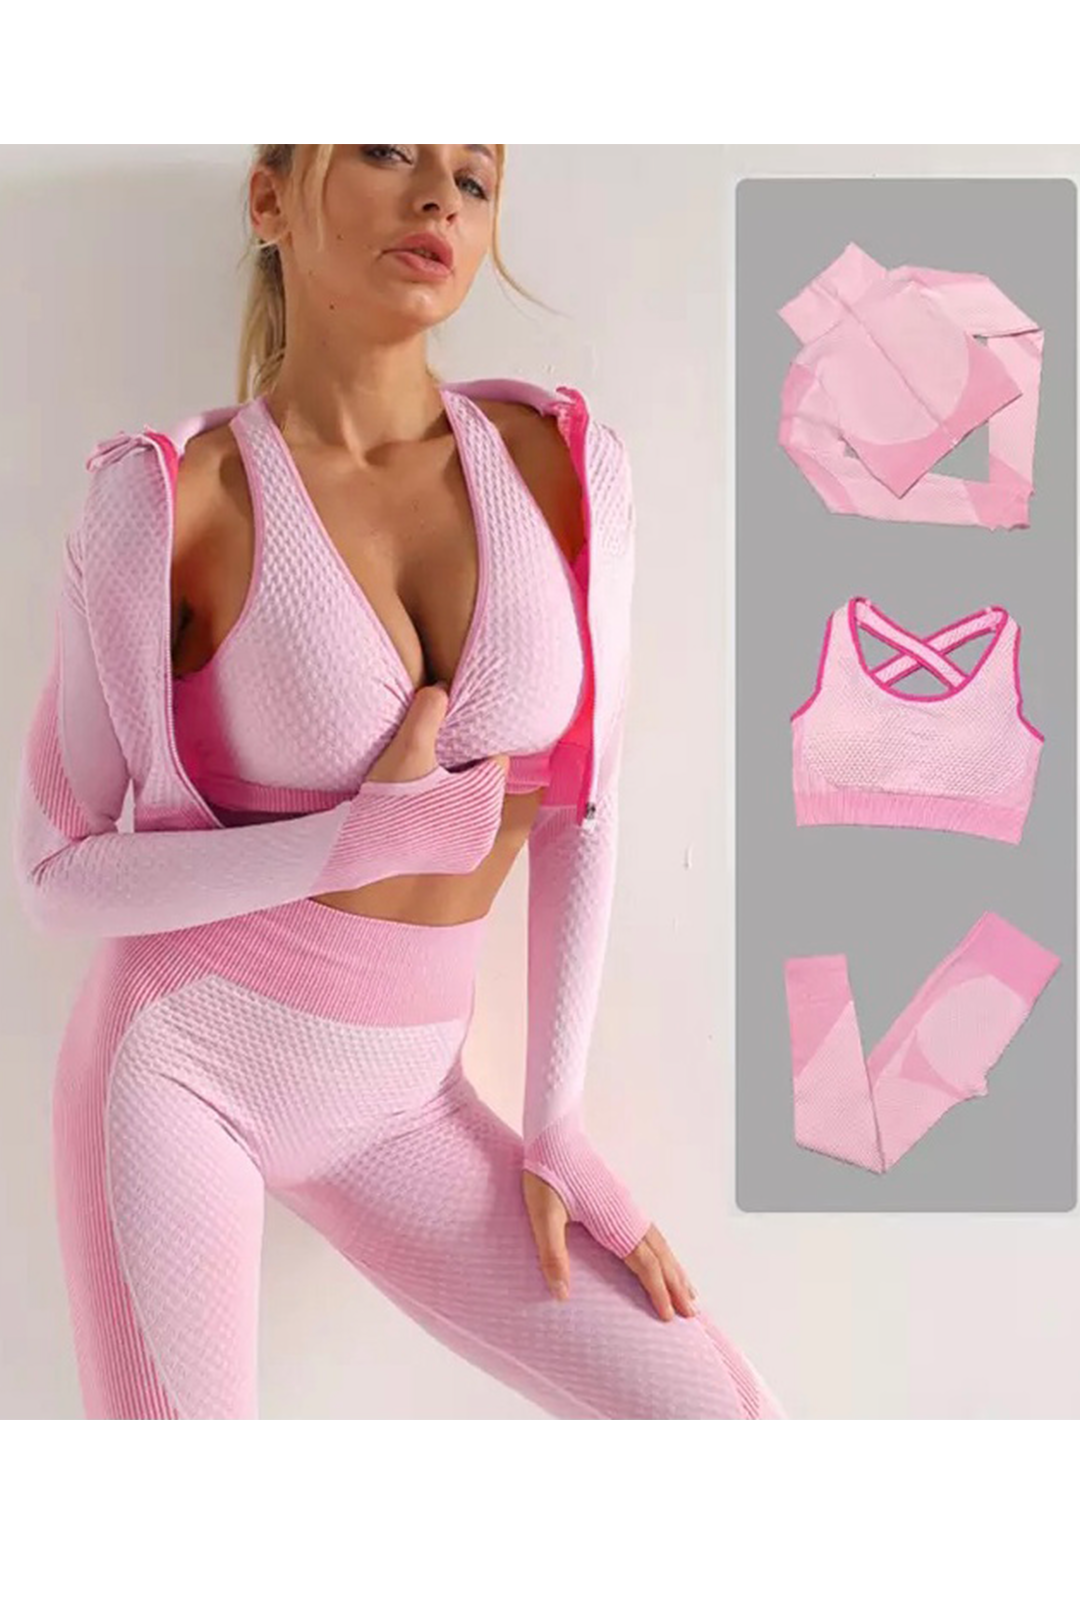 Women 3pcs Yoga Sets Fitness sportswear Suit Long Sleeve Zipper with Sport  Bra & Leggings Pants Pink !Shop Now